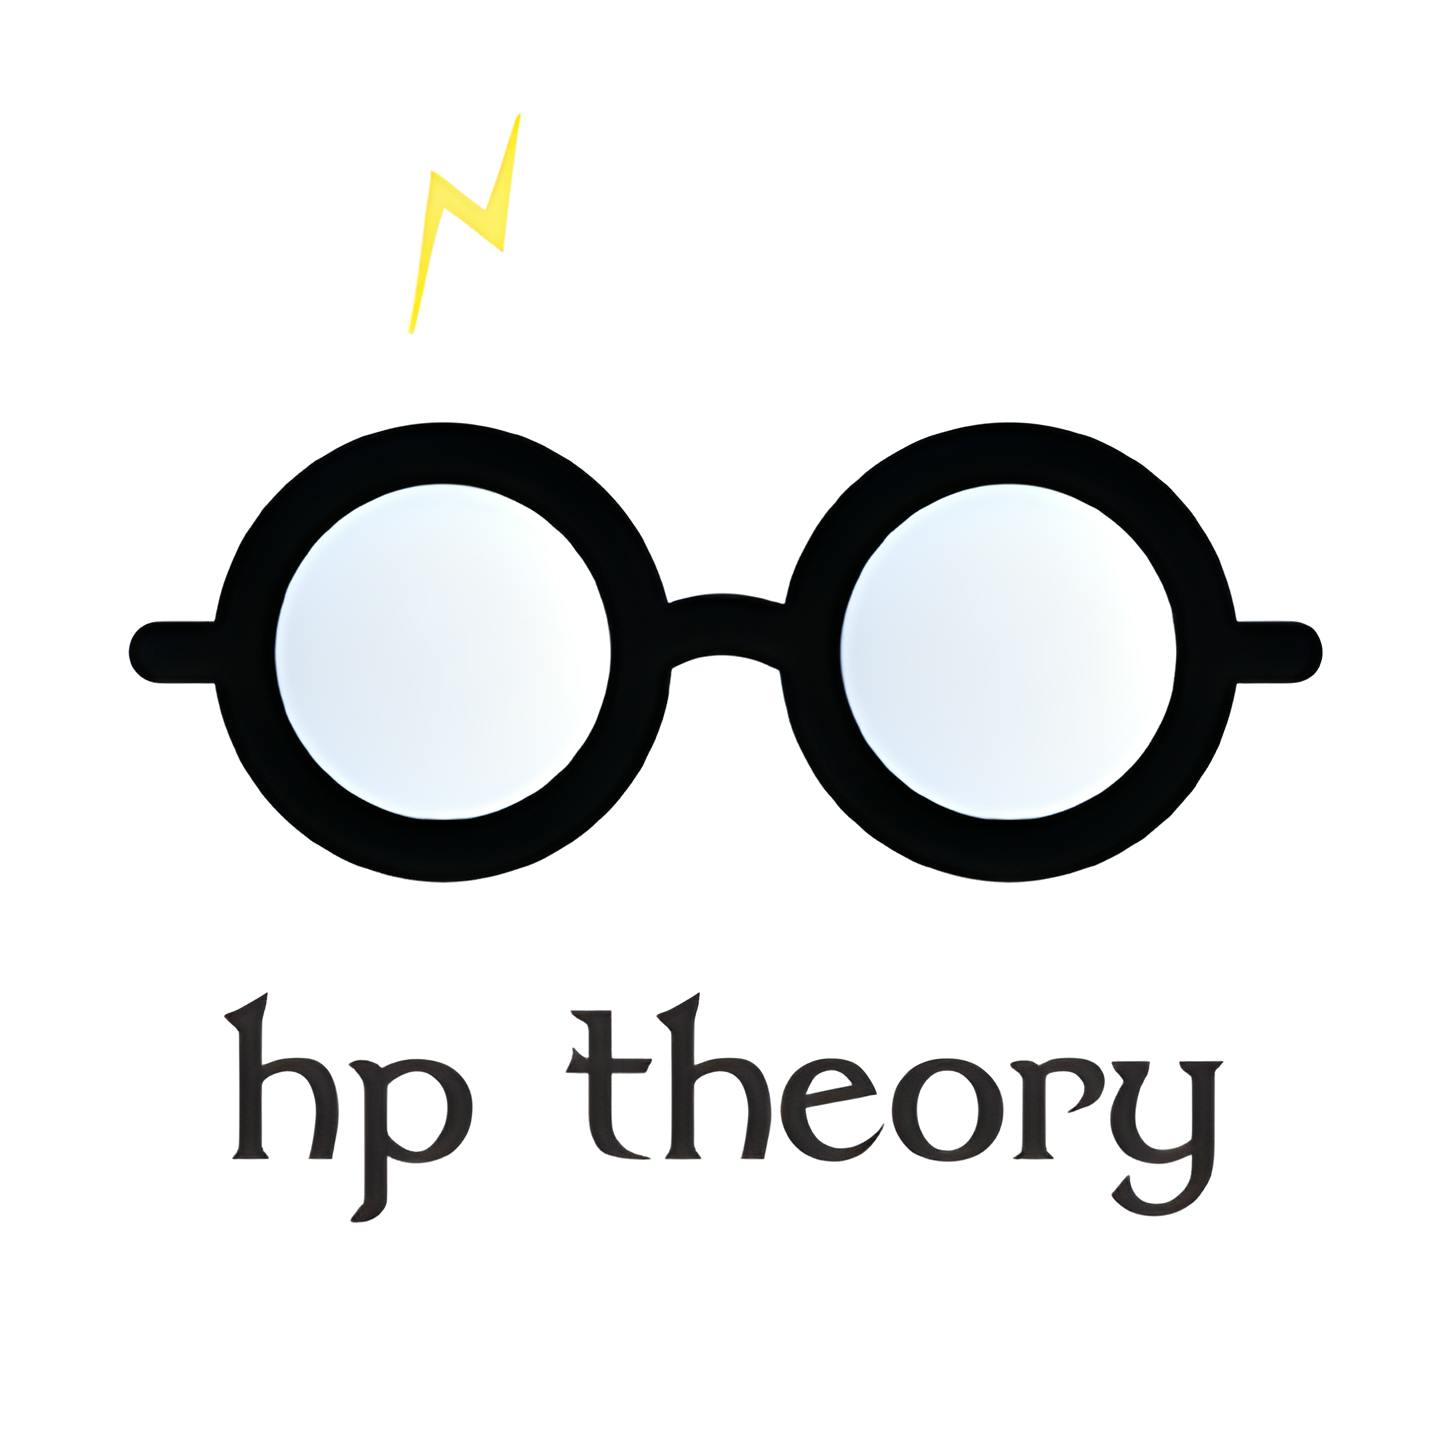 Harry Potter Theory podcast